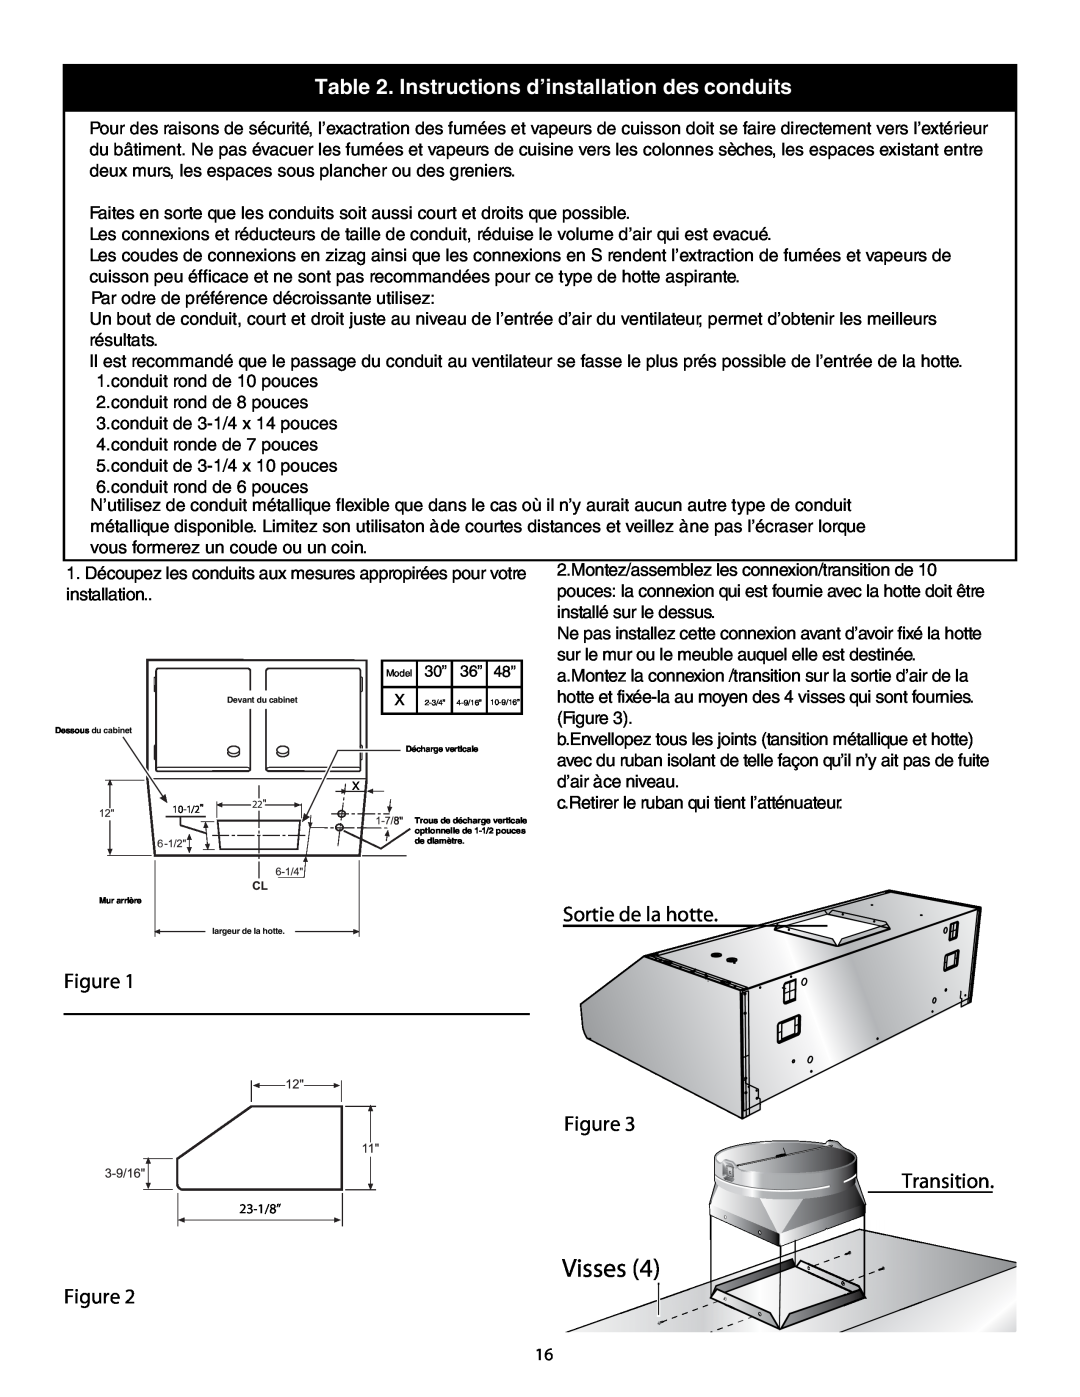 Thermador HPWB30, HPWB48, HPWB36 installation manual Visses, Instructions d’installation des conduits 